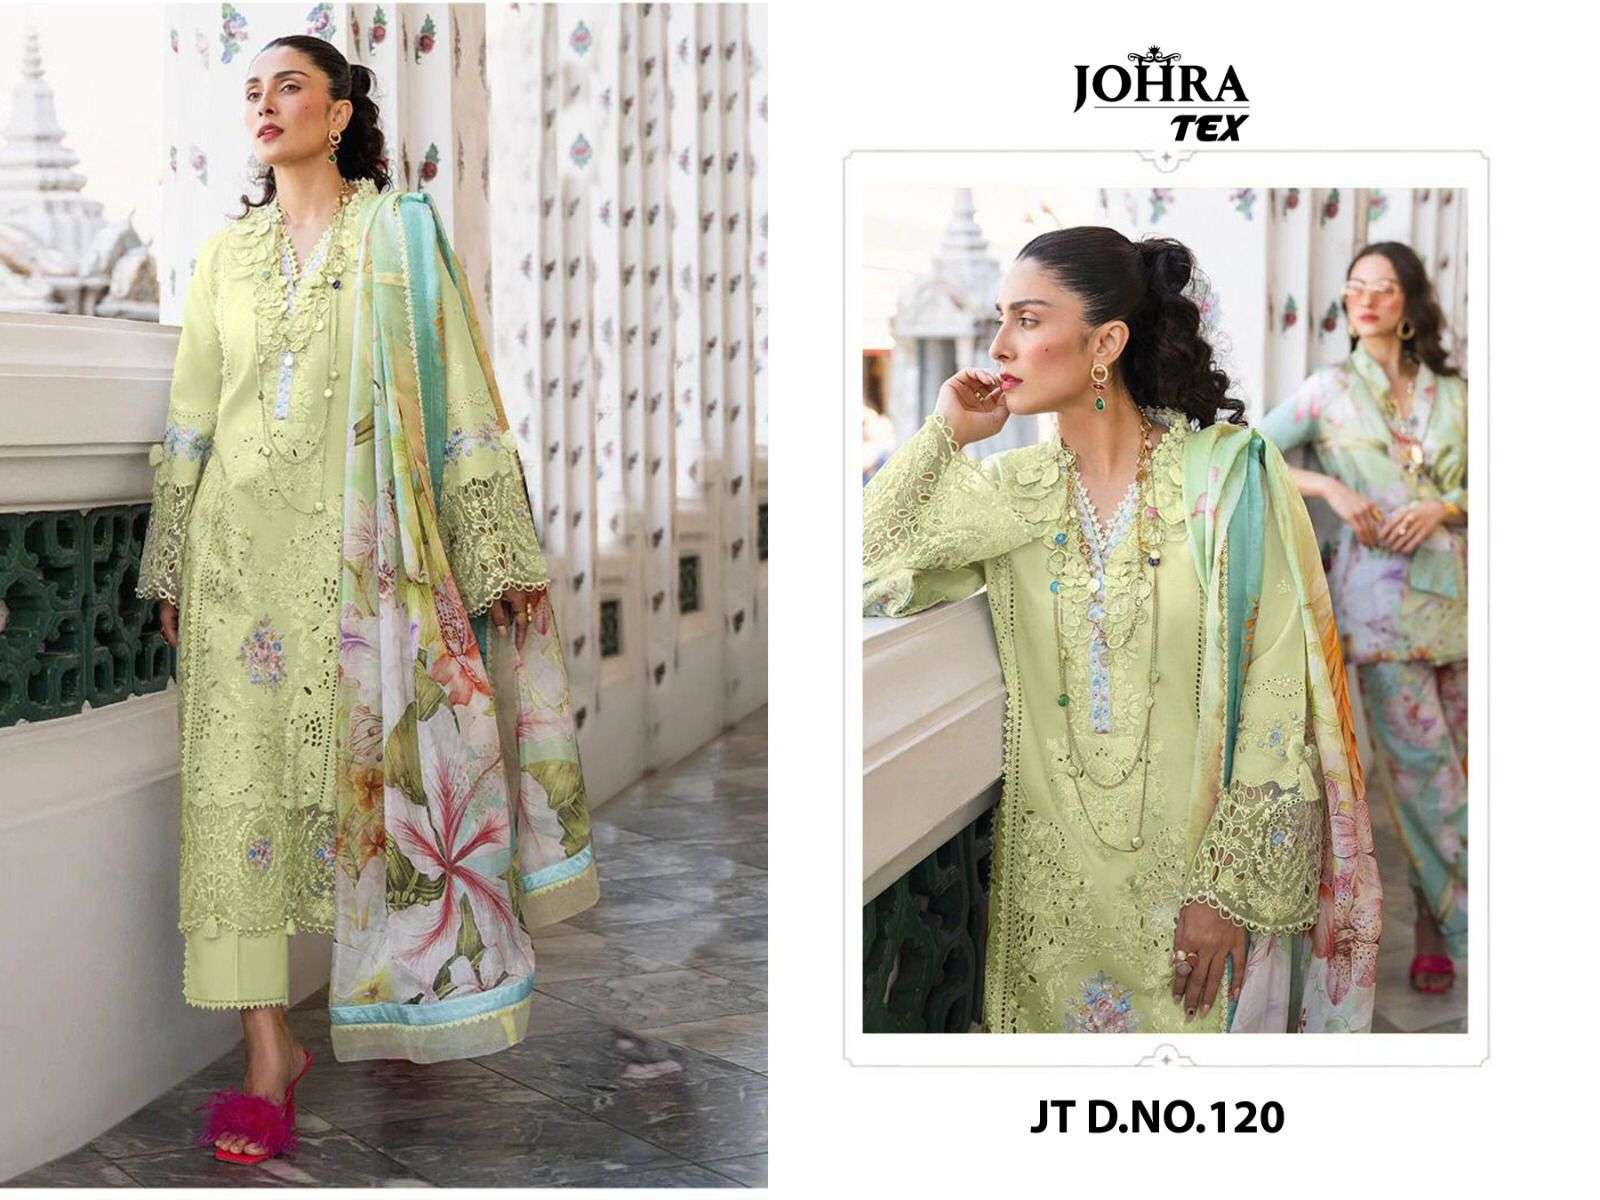 johra tex Jt-120 designer cambric cotton suit 